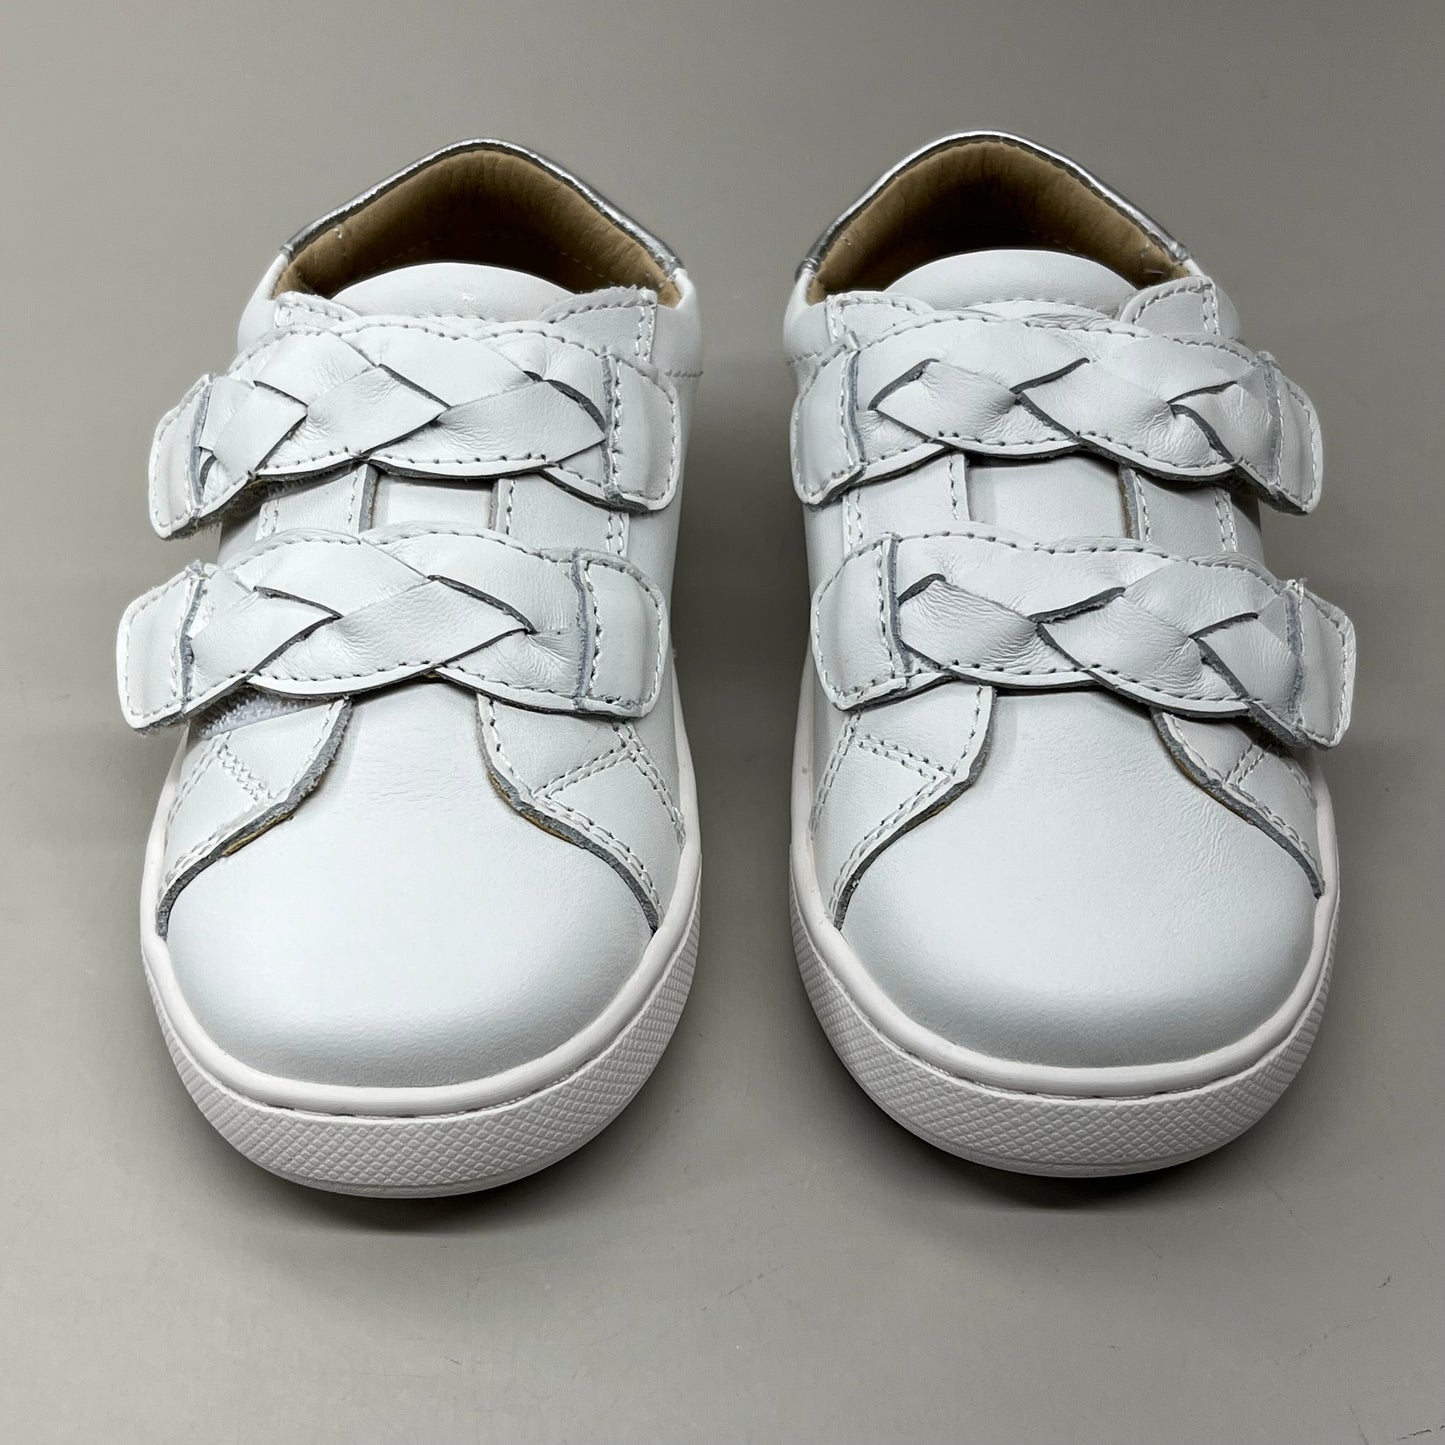 OLD SOLES Baby Plats Leather Shoe Sz 8 EU 24 Snow / Silver #6134